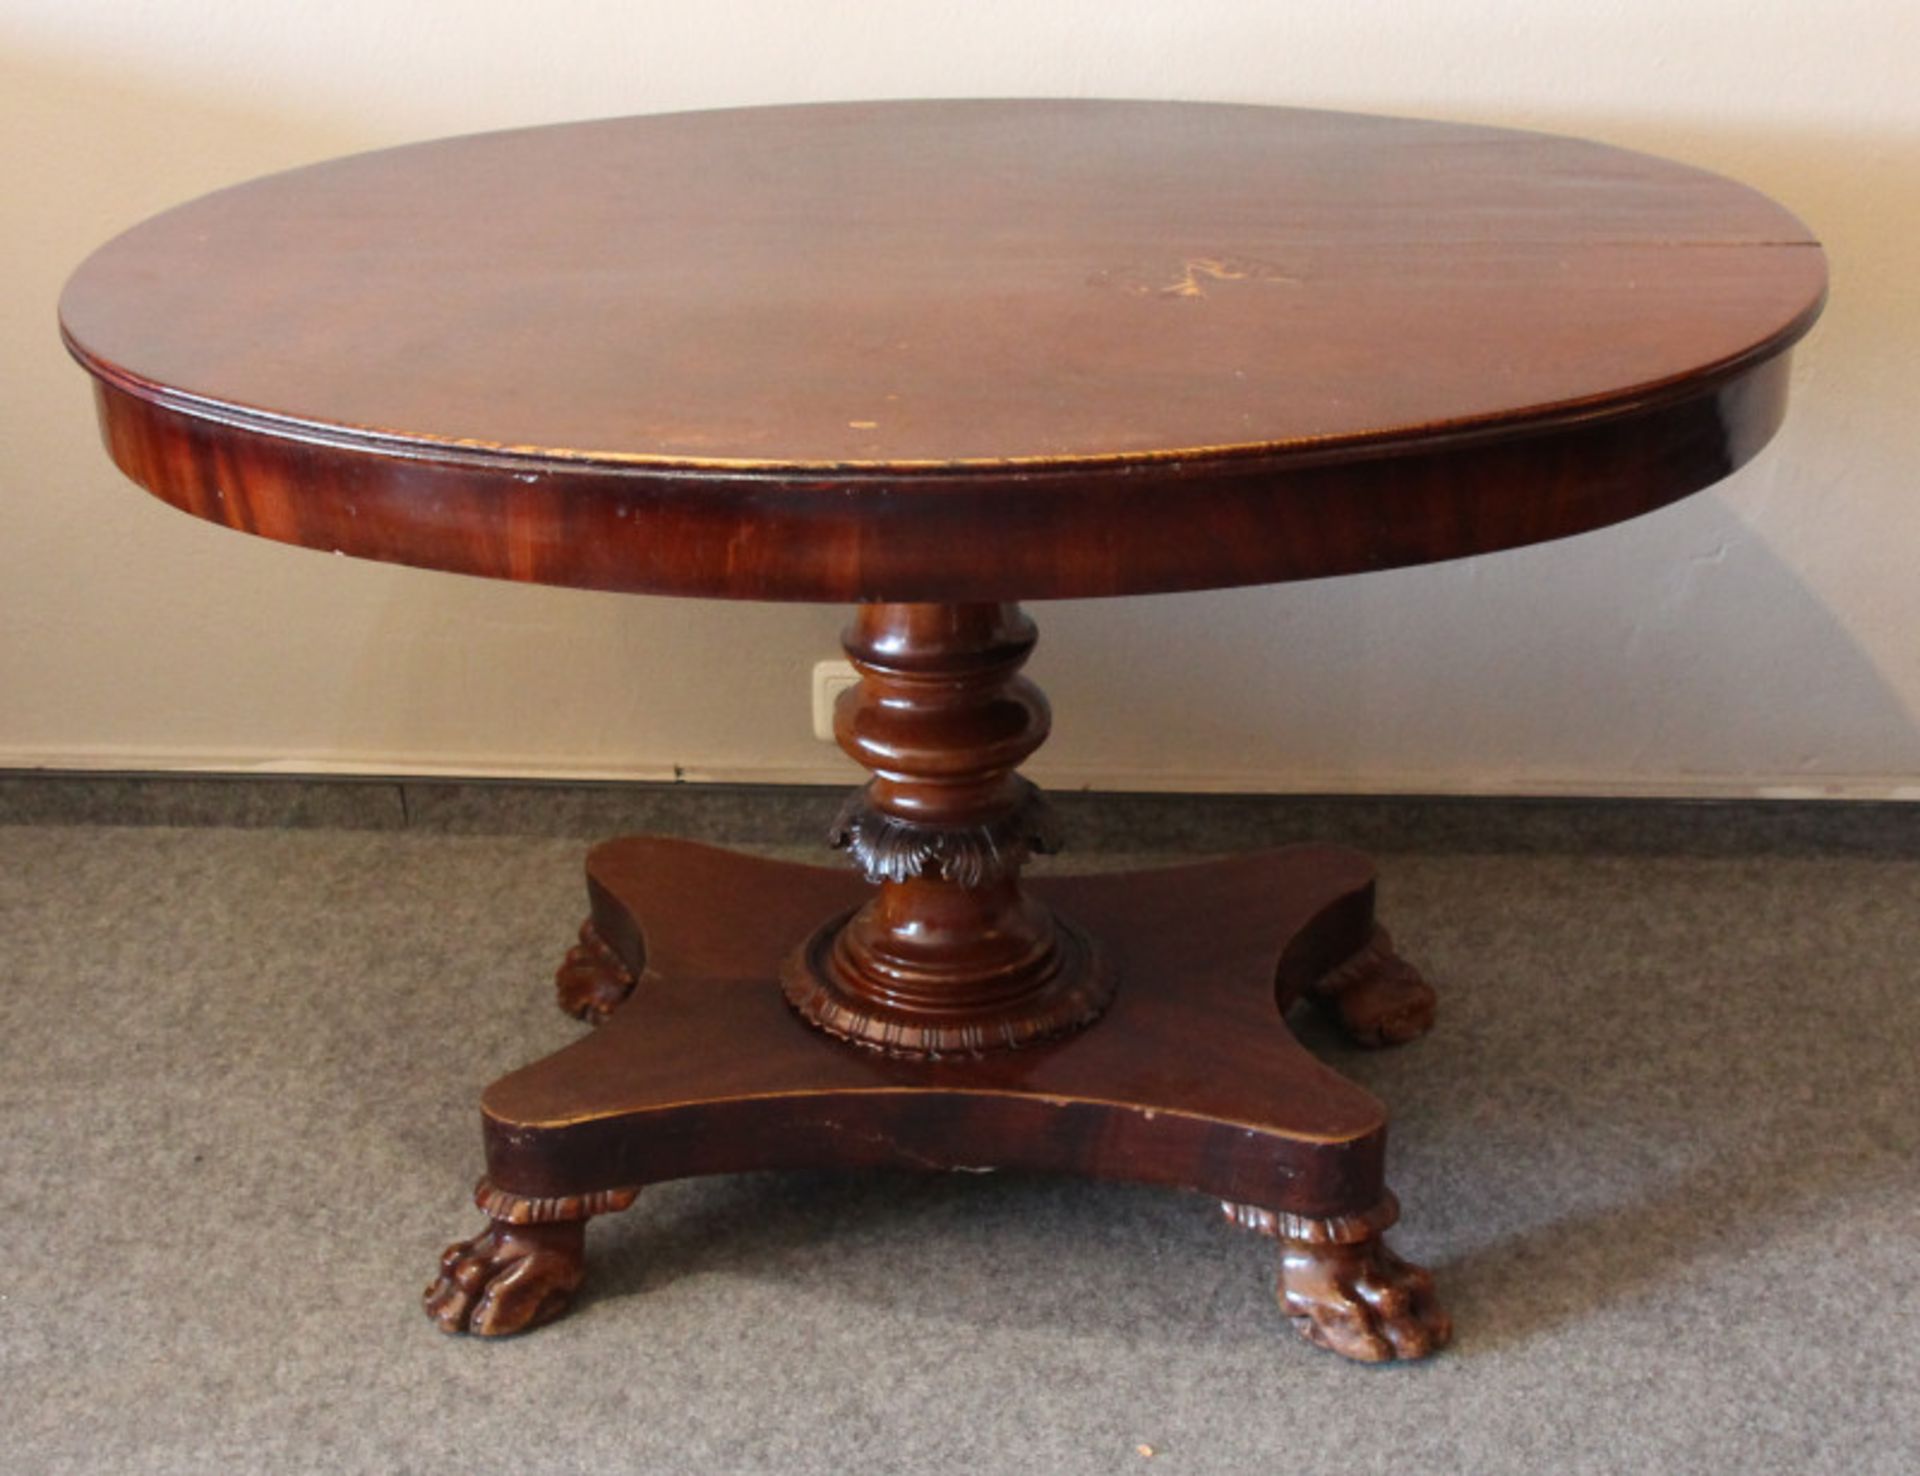 Ovaler Biedermeier Tisch aus Mahagoni/Tischplatte Esche, gebeizt, 19. Jhd.beschnitzte Säule,